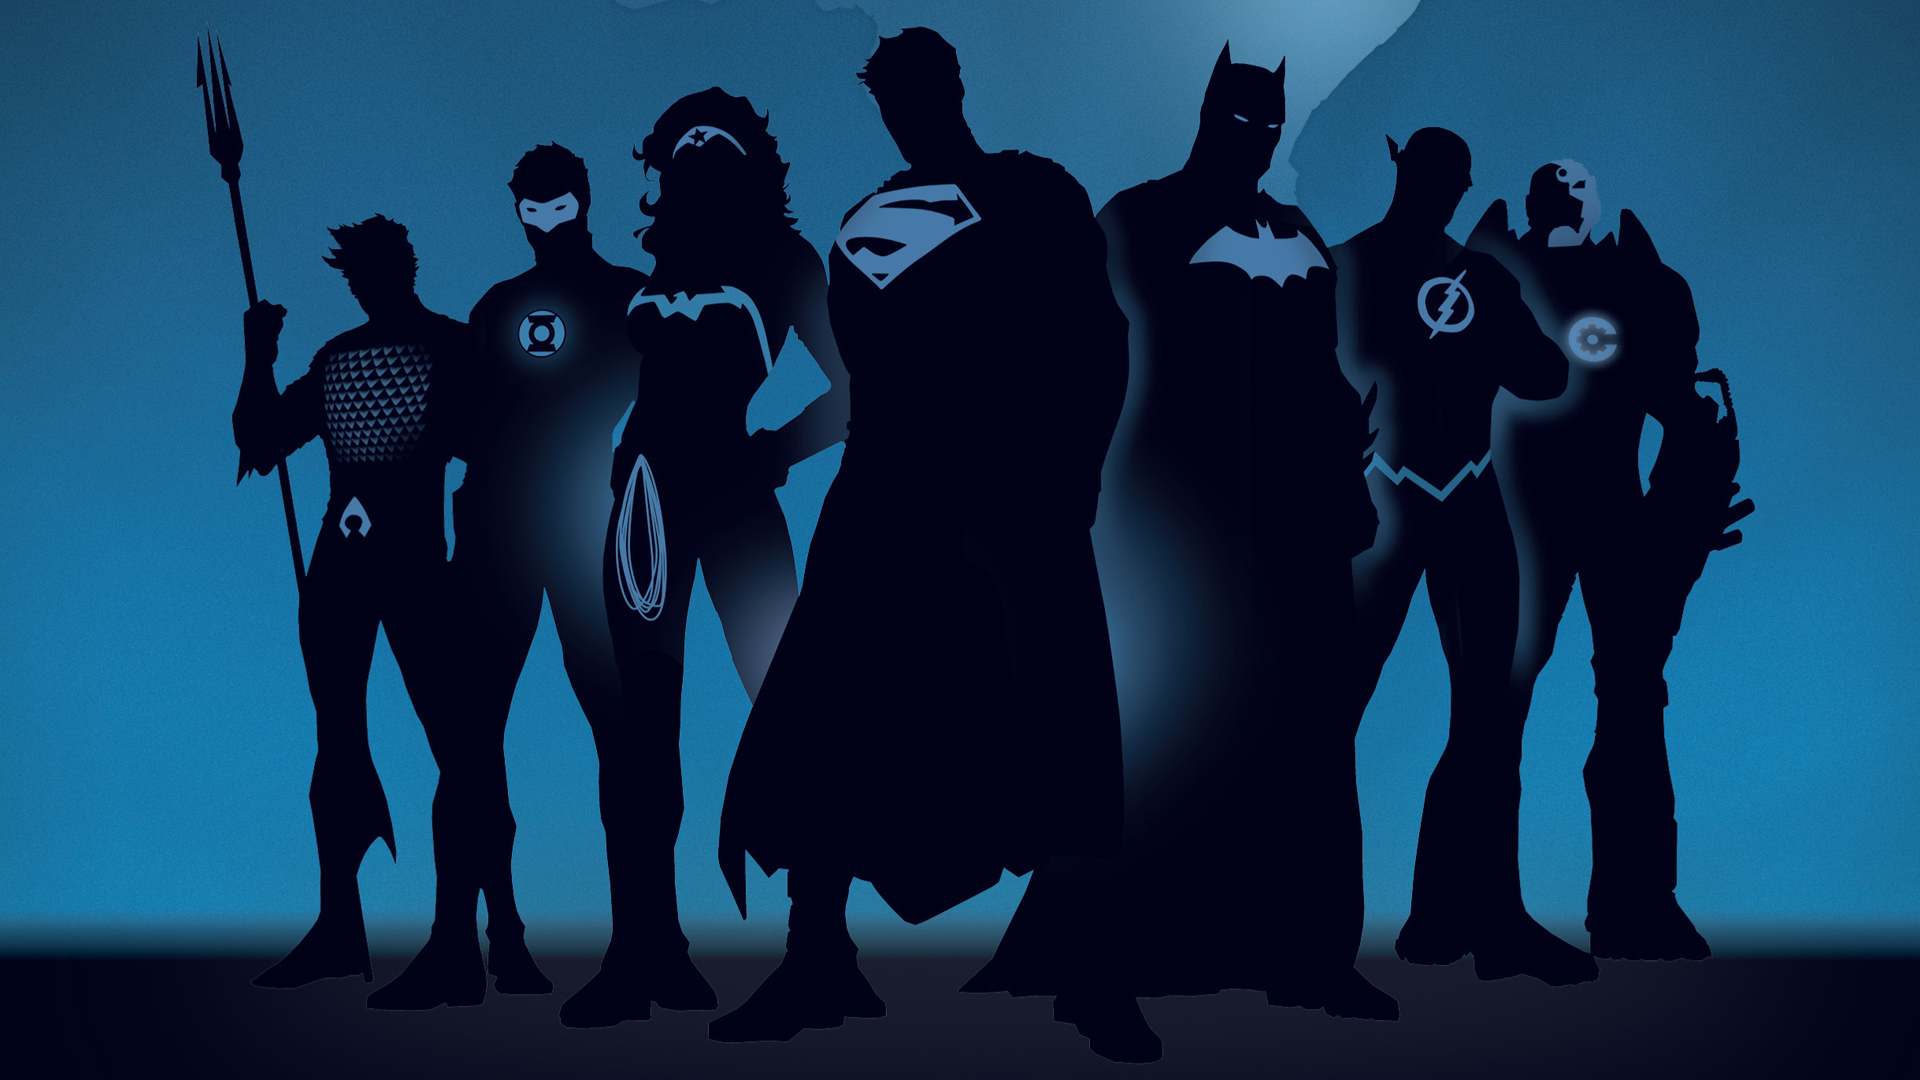 justice league, superman, bruce wayne, batman, dc comics, comics, wonder woman, aquaman, barry allen, cyborg (dc comics), diana prince, flash, green lantern, the dark knight UHD